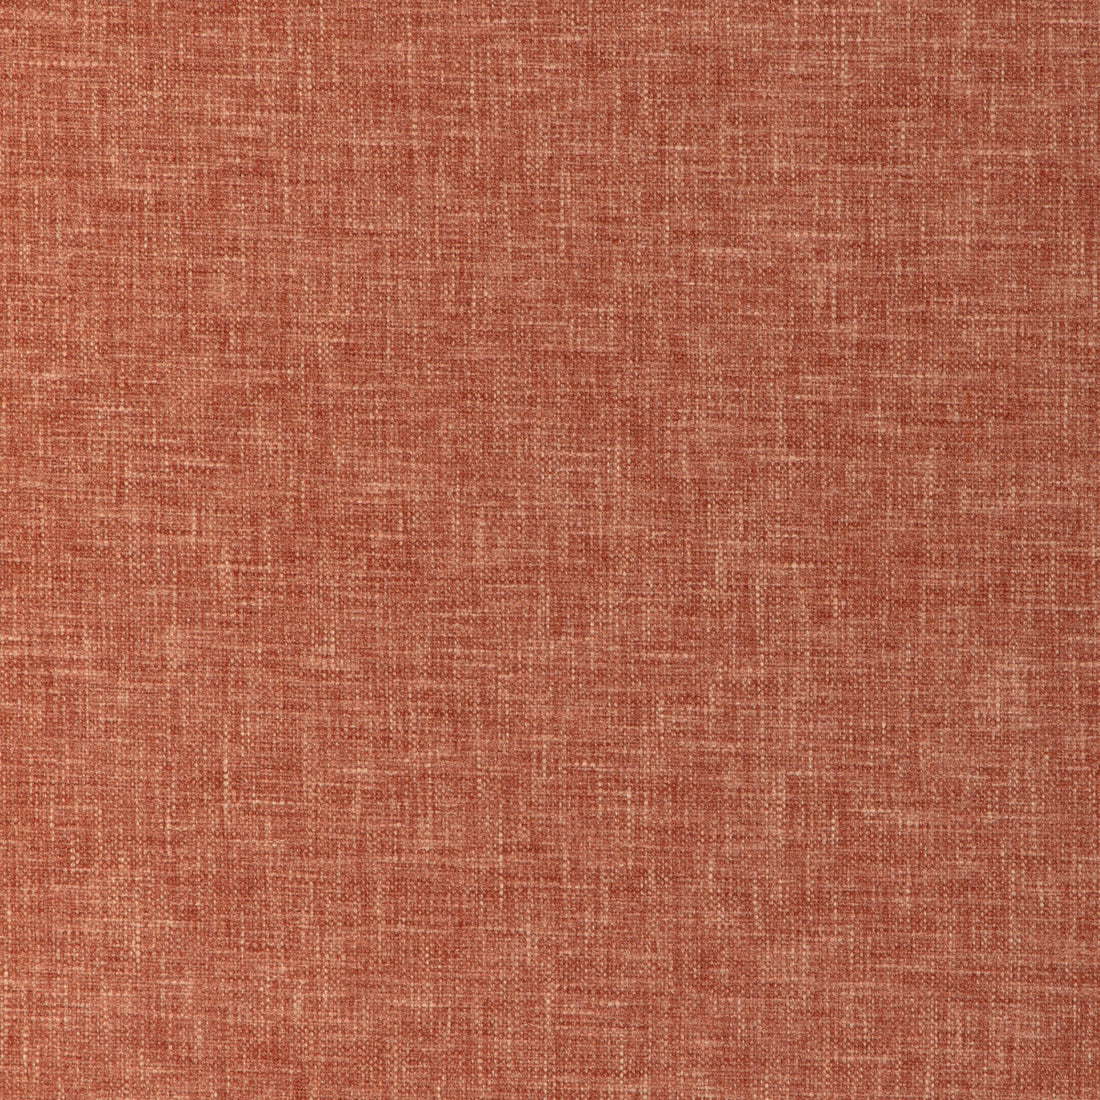 Kravet Smart fabric in 36657-24 color - pattern 36657.24.0 - by Kravet Smart in the Performance Kravetarmor collection